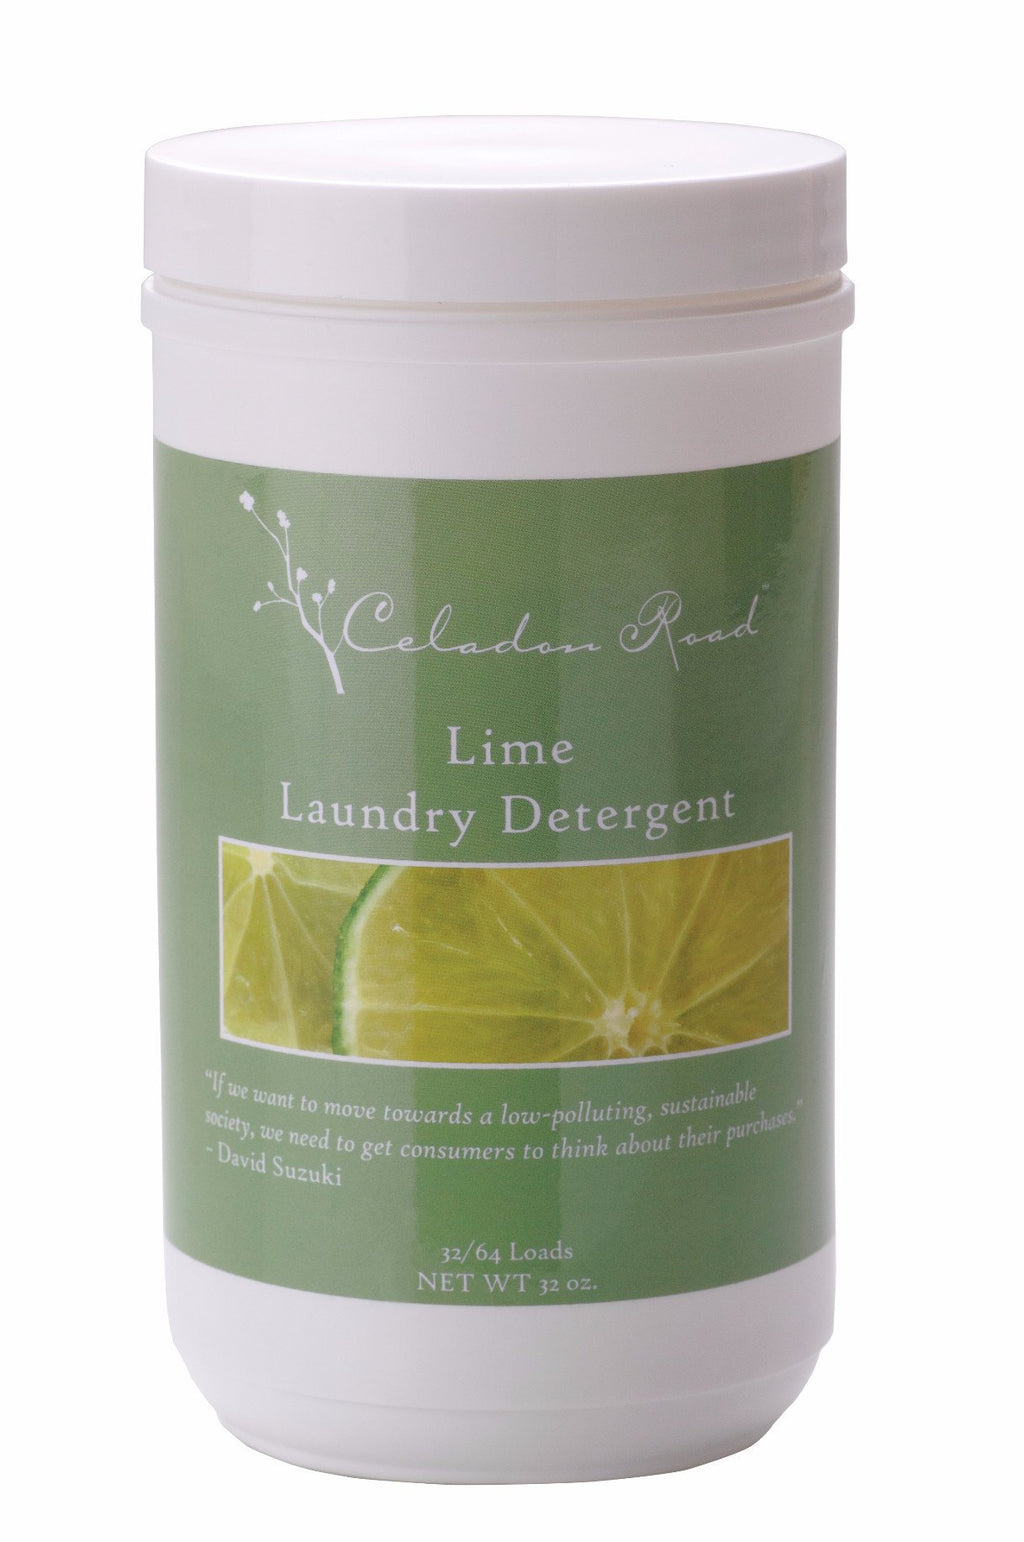 Lime Laundry Detergent- Celadon Road- www.celadonroad.com